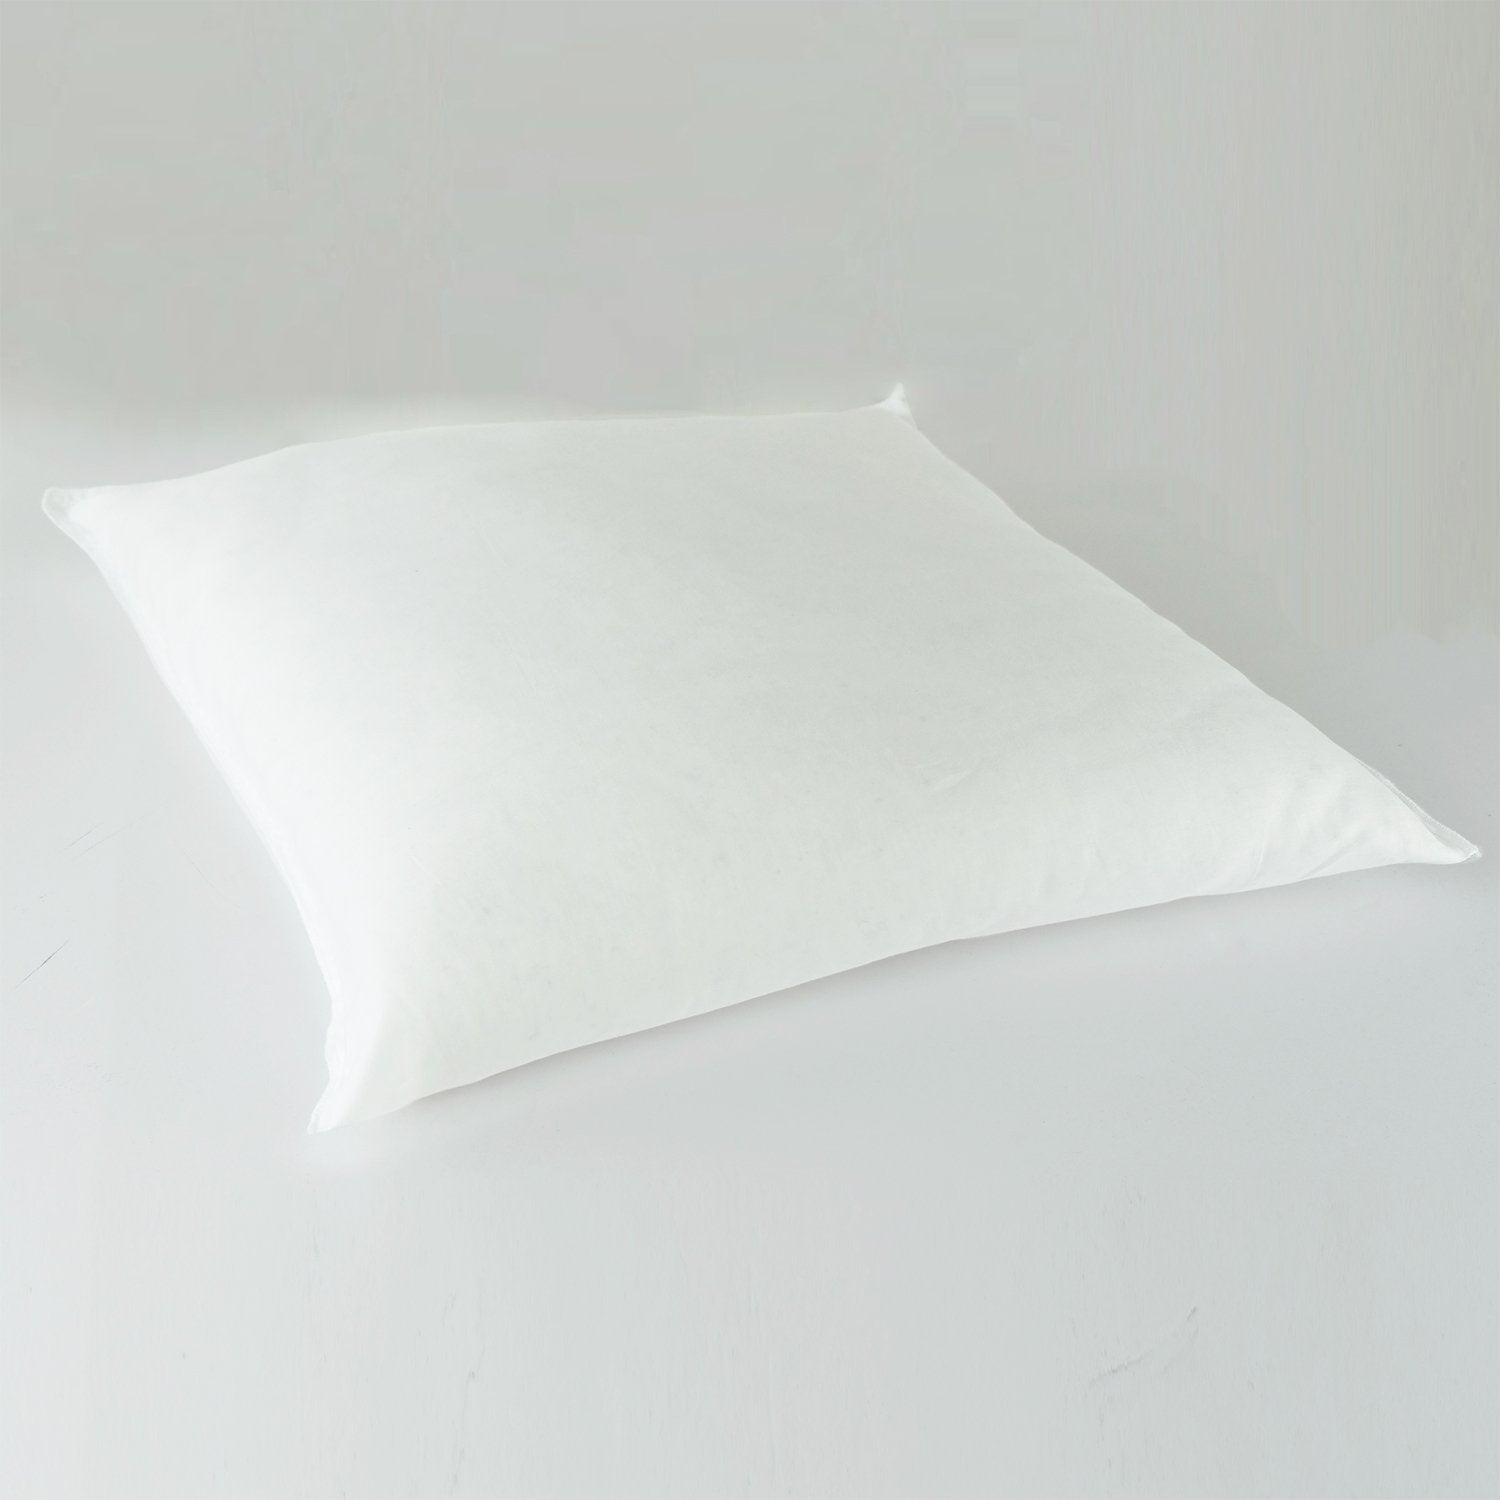 J-Life Sakura Navy Zabuton Floor Pillow_Pillows & Shams_Zabuton Floor Pillows_100% Cotton_Reversible_Handmade